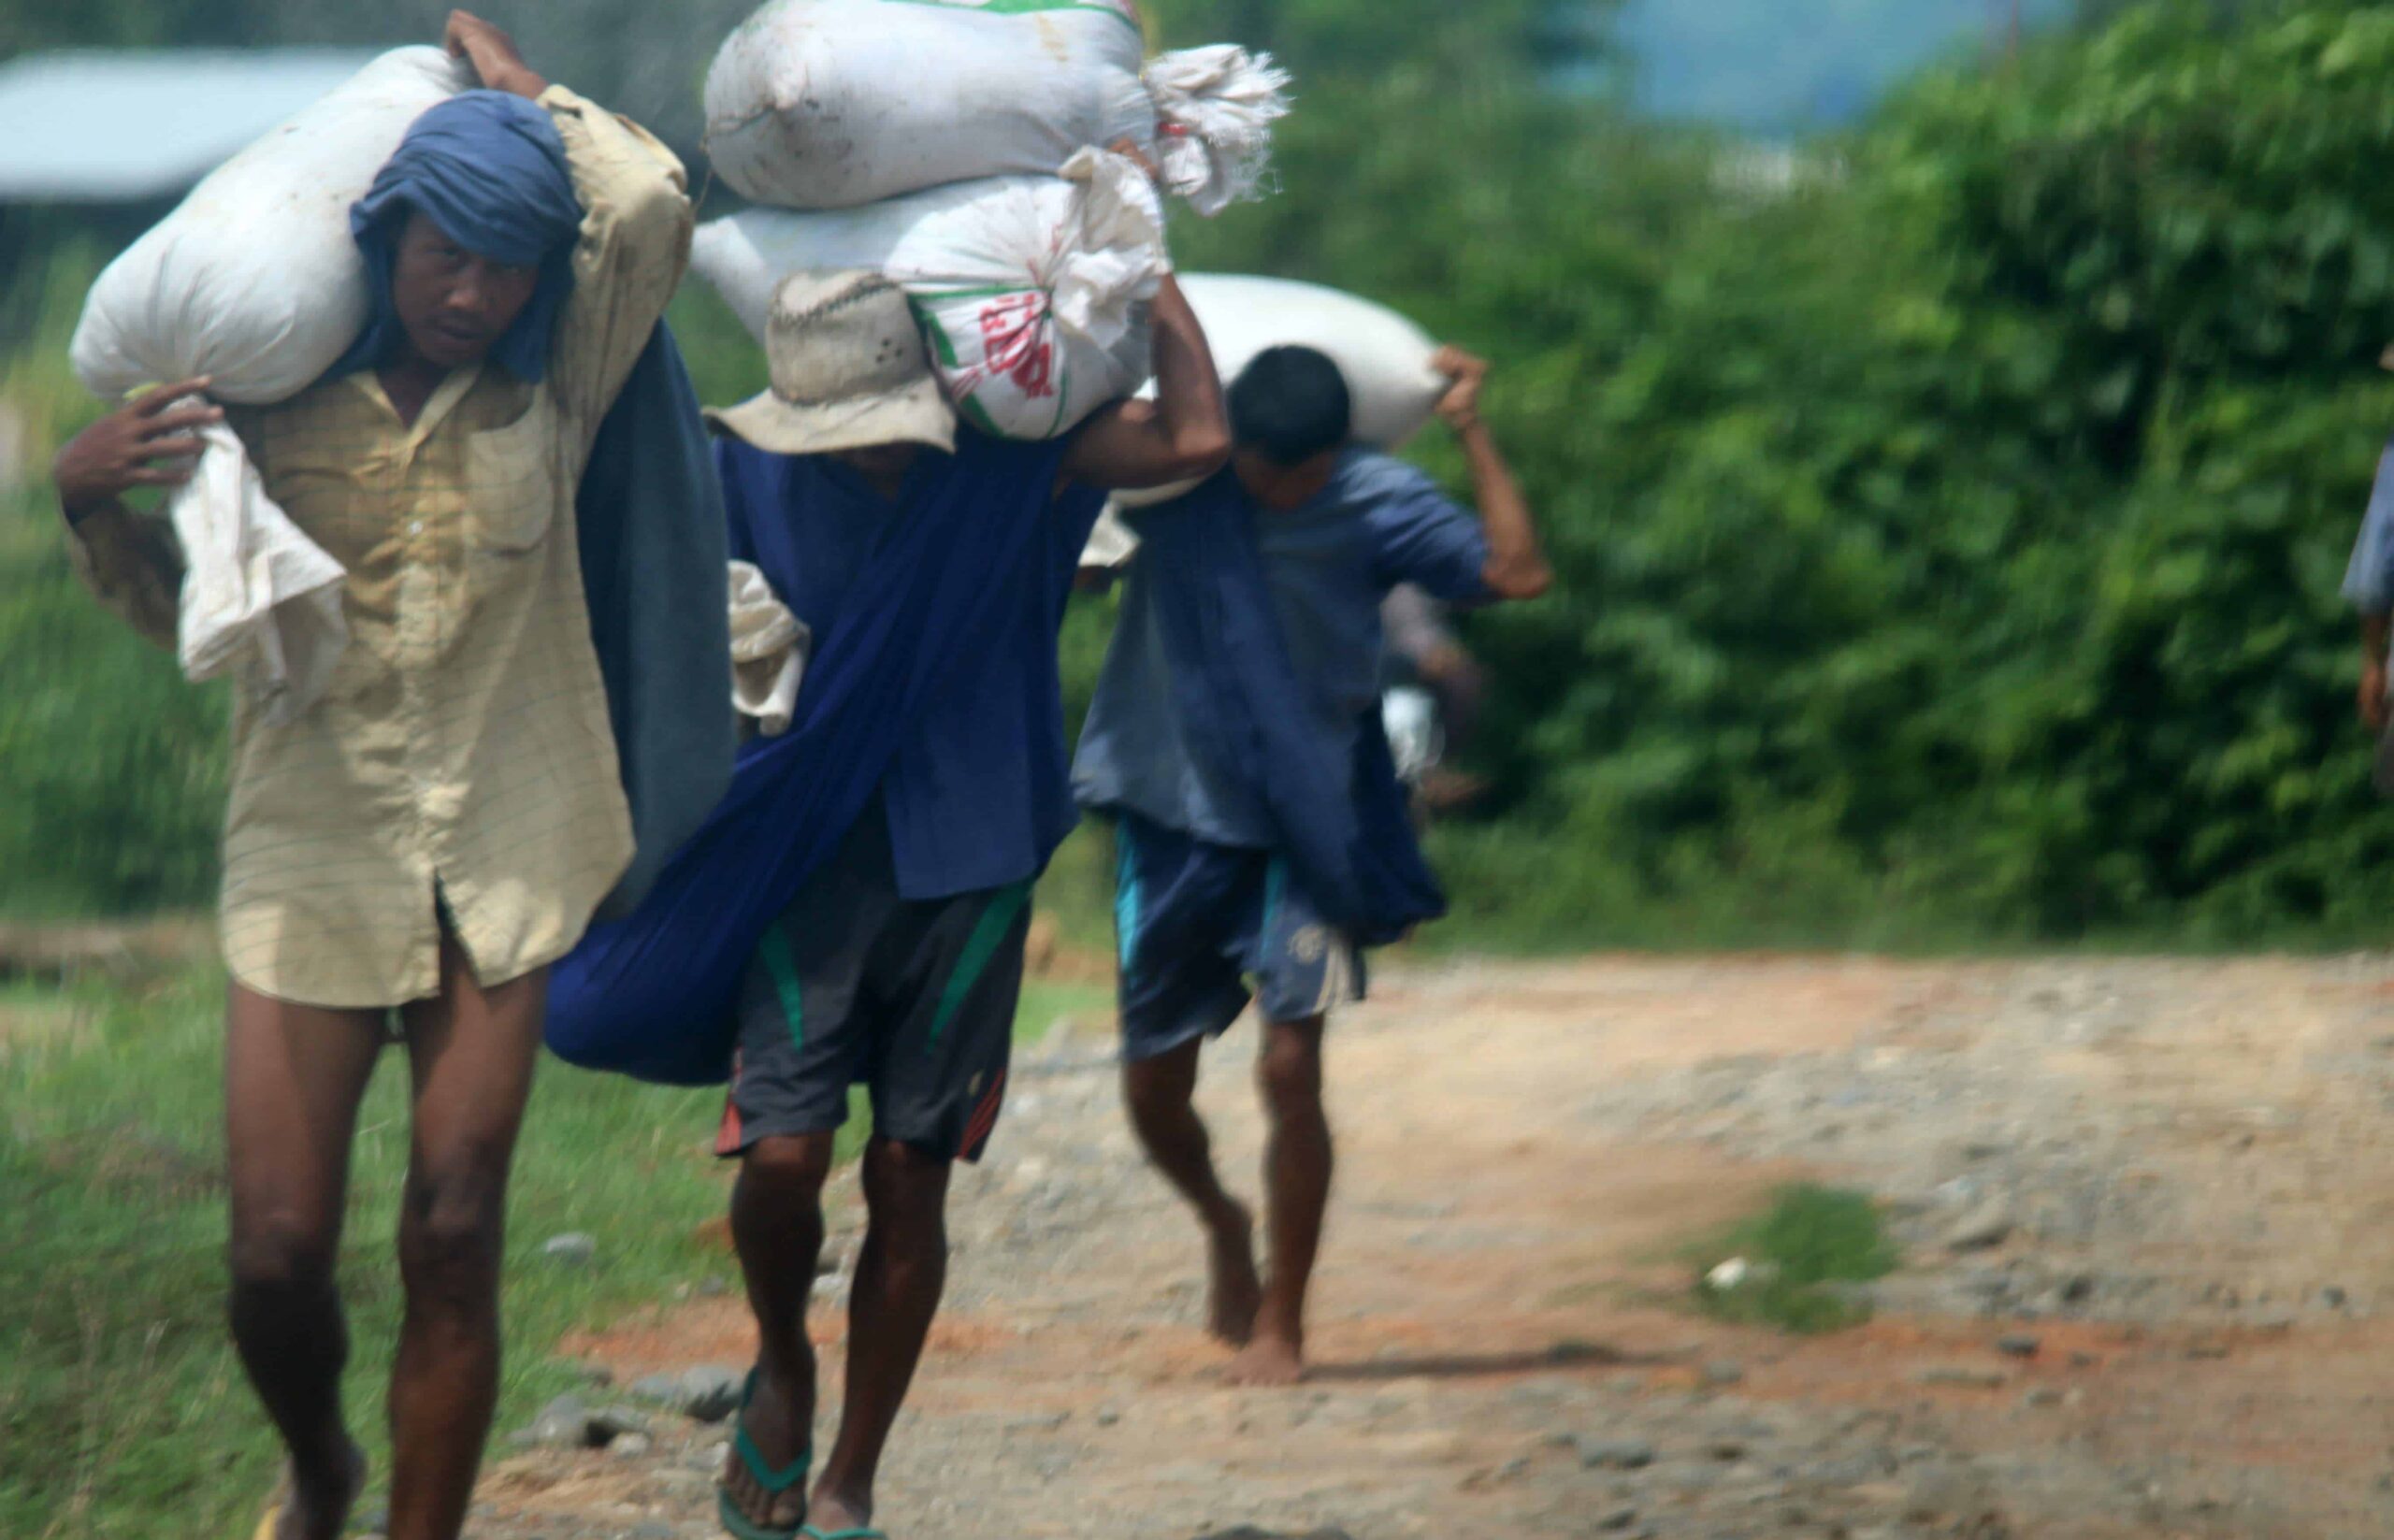 3 men carry heavy sacks down a dirt road